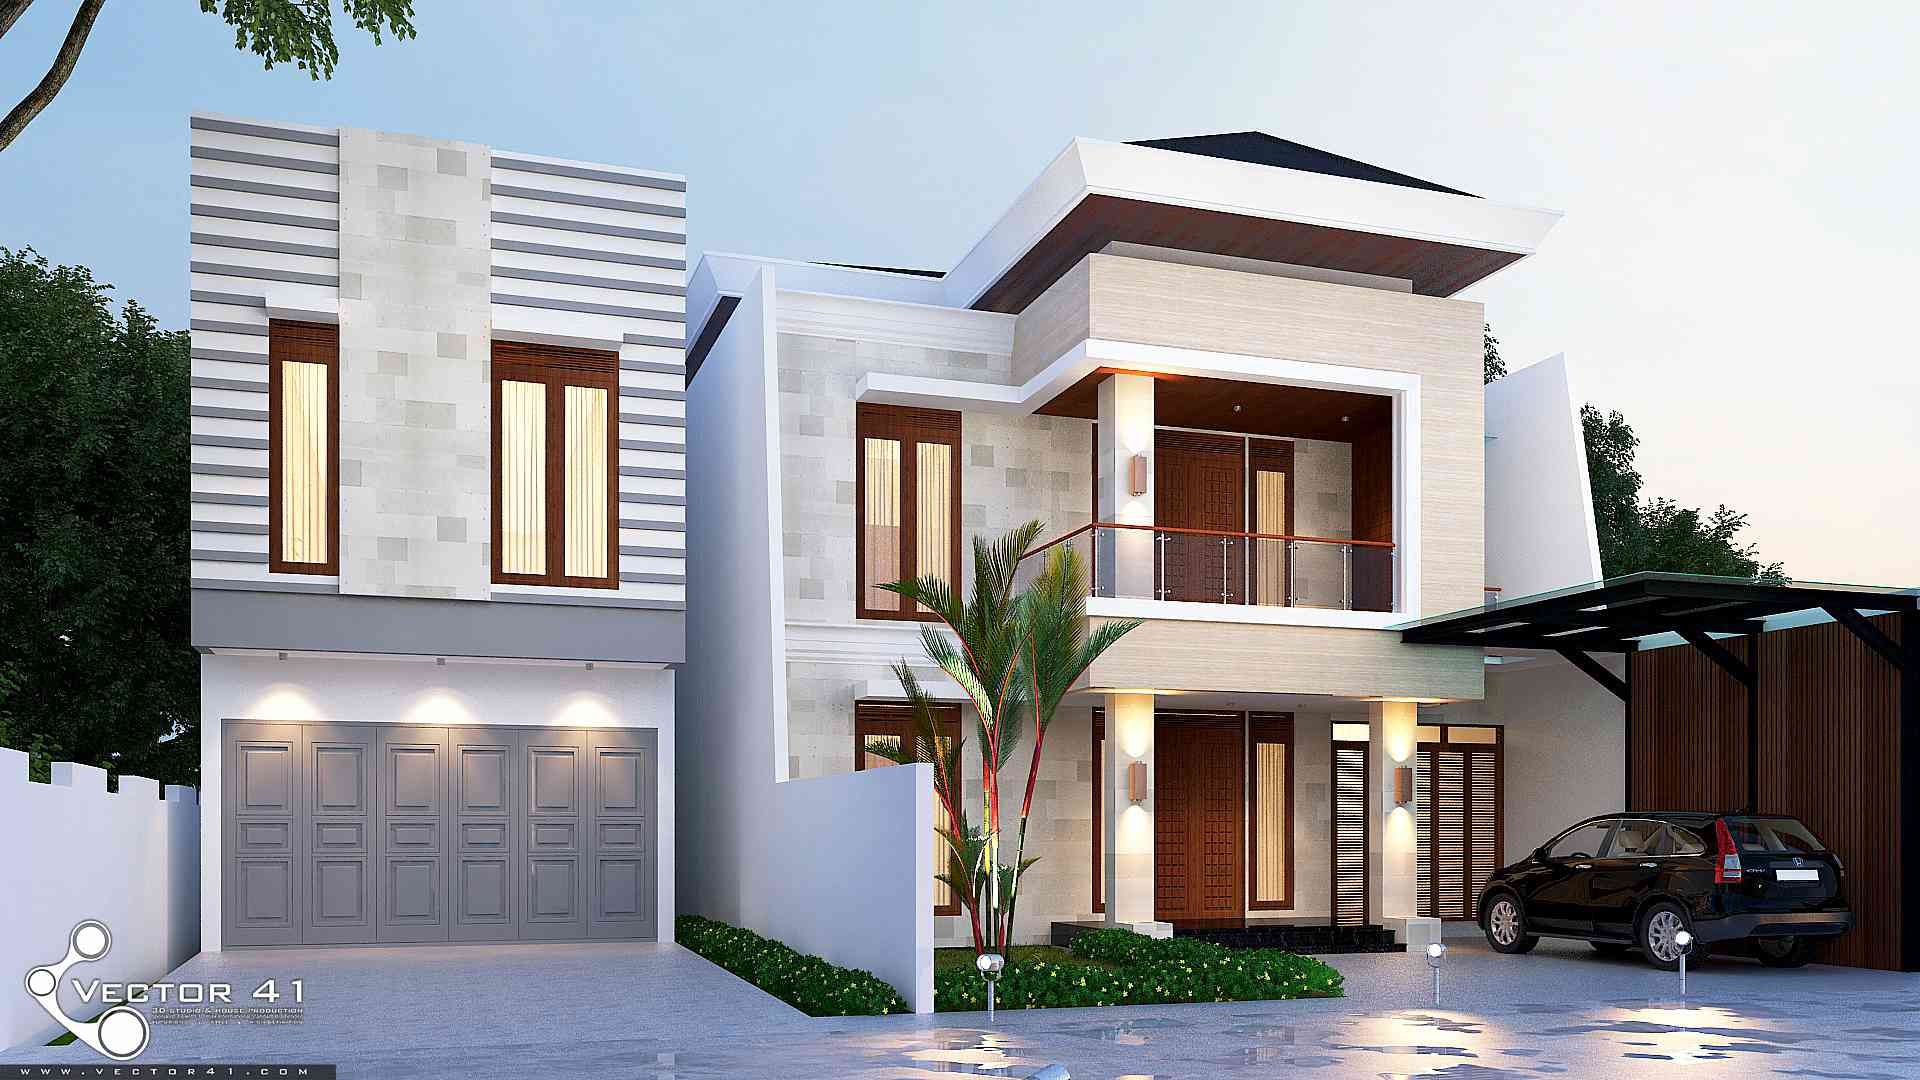 Exterior House_Medan (Mr. Andi), VECTOR41 VECTOR41 Prefabricated home